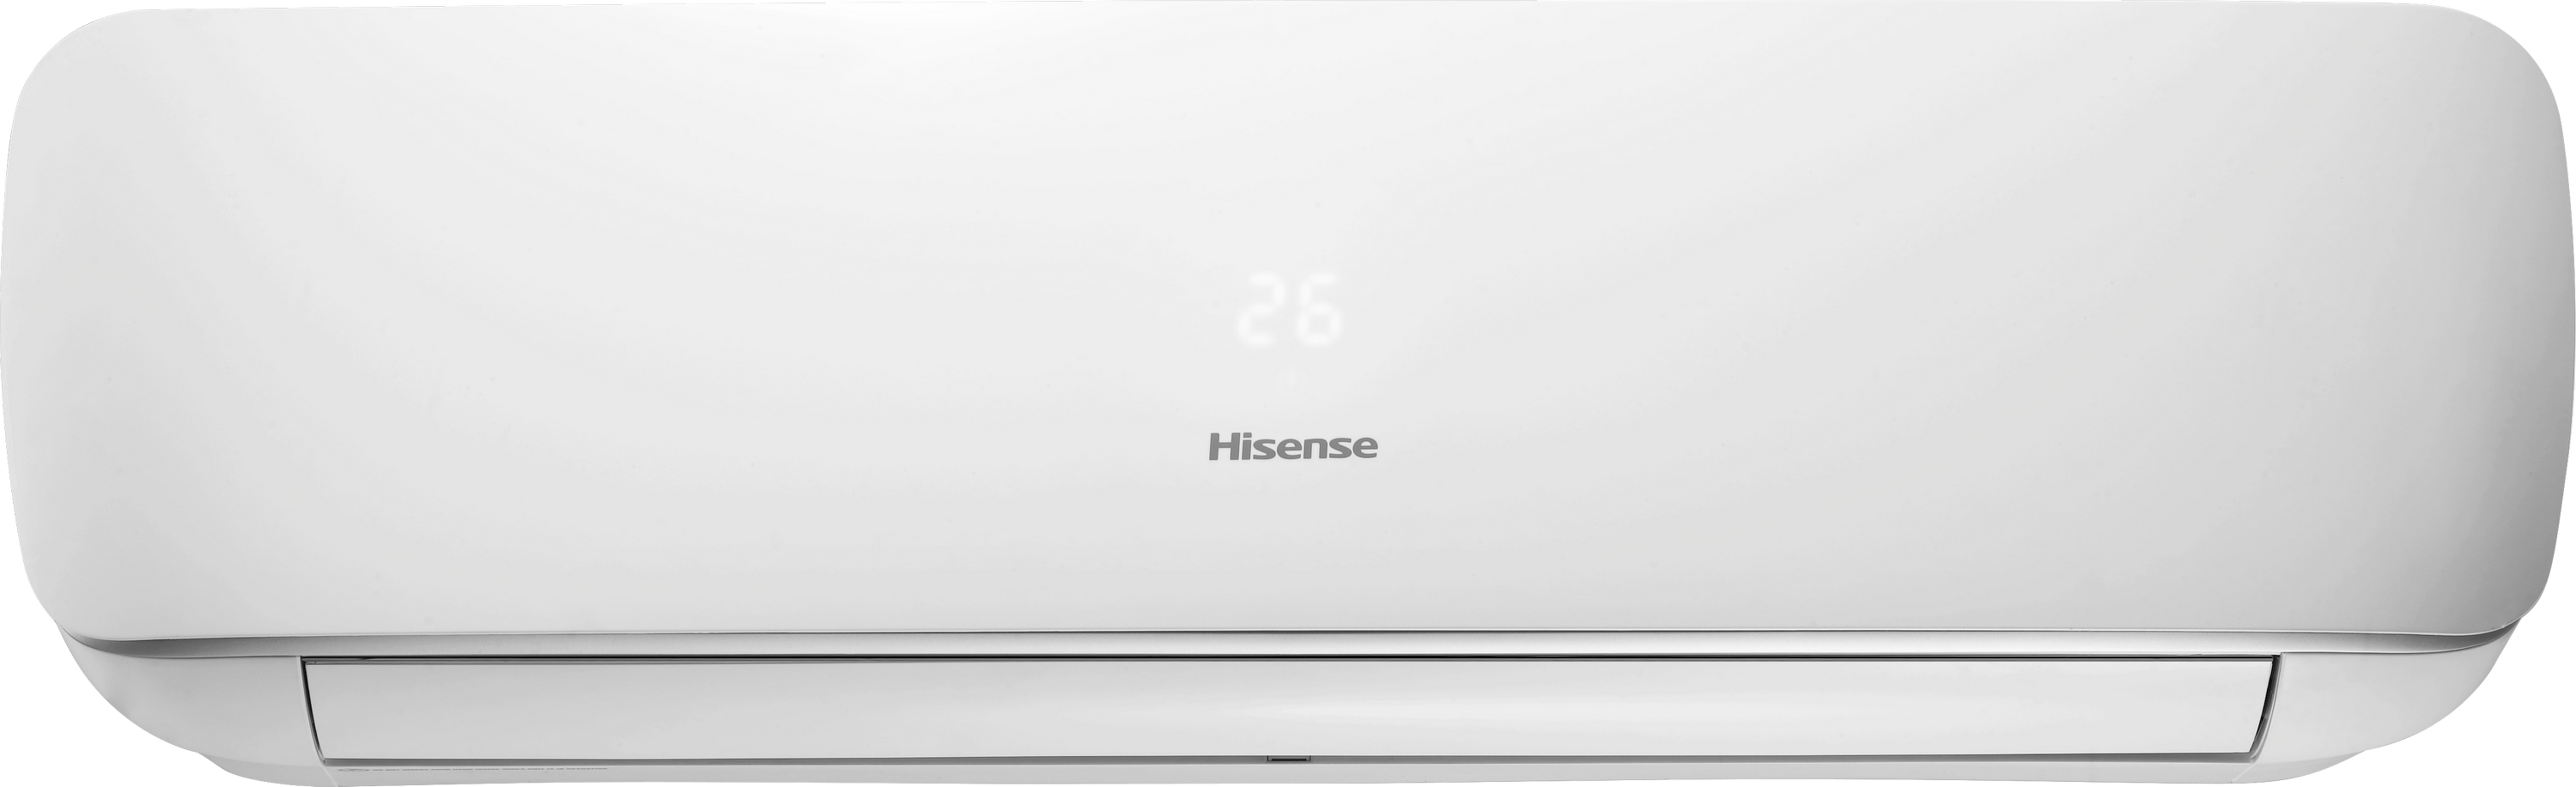 Кондиционер сплит-система Hisense Apple Pie AST-18UW4SXATG07 цена 0.00 грн - фотография 2